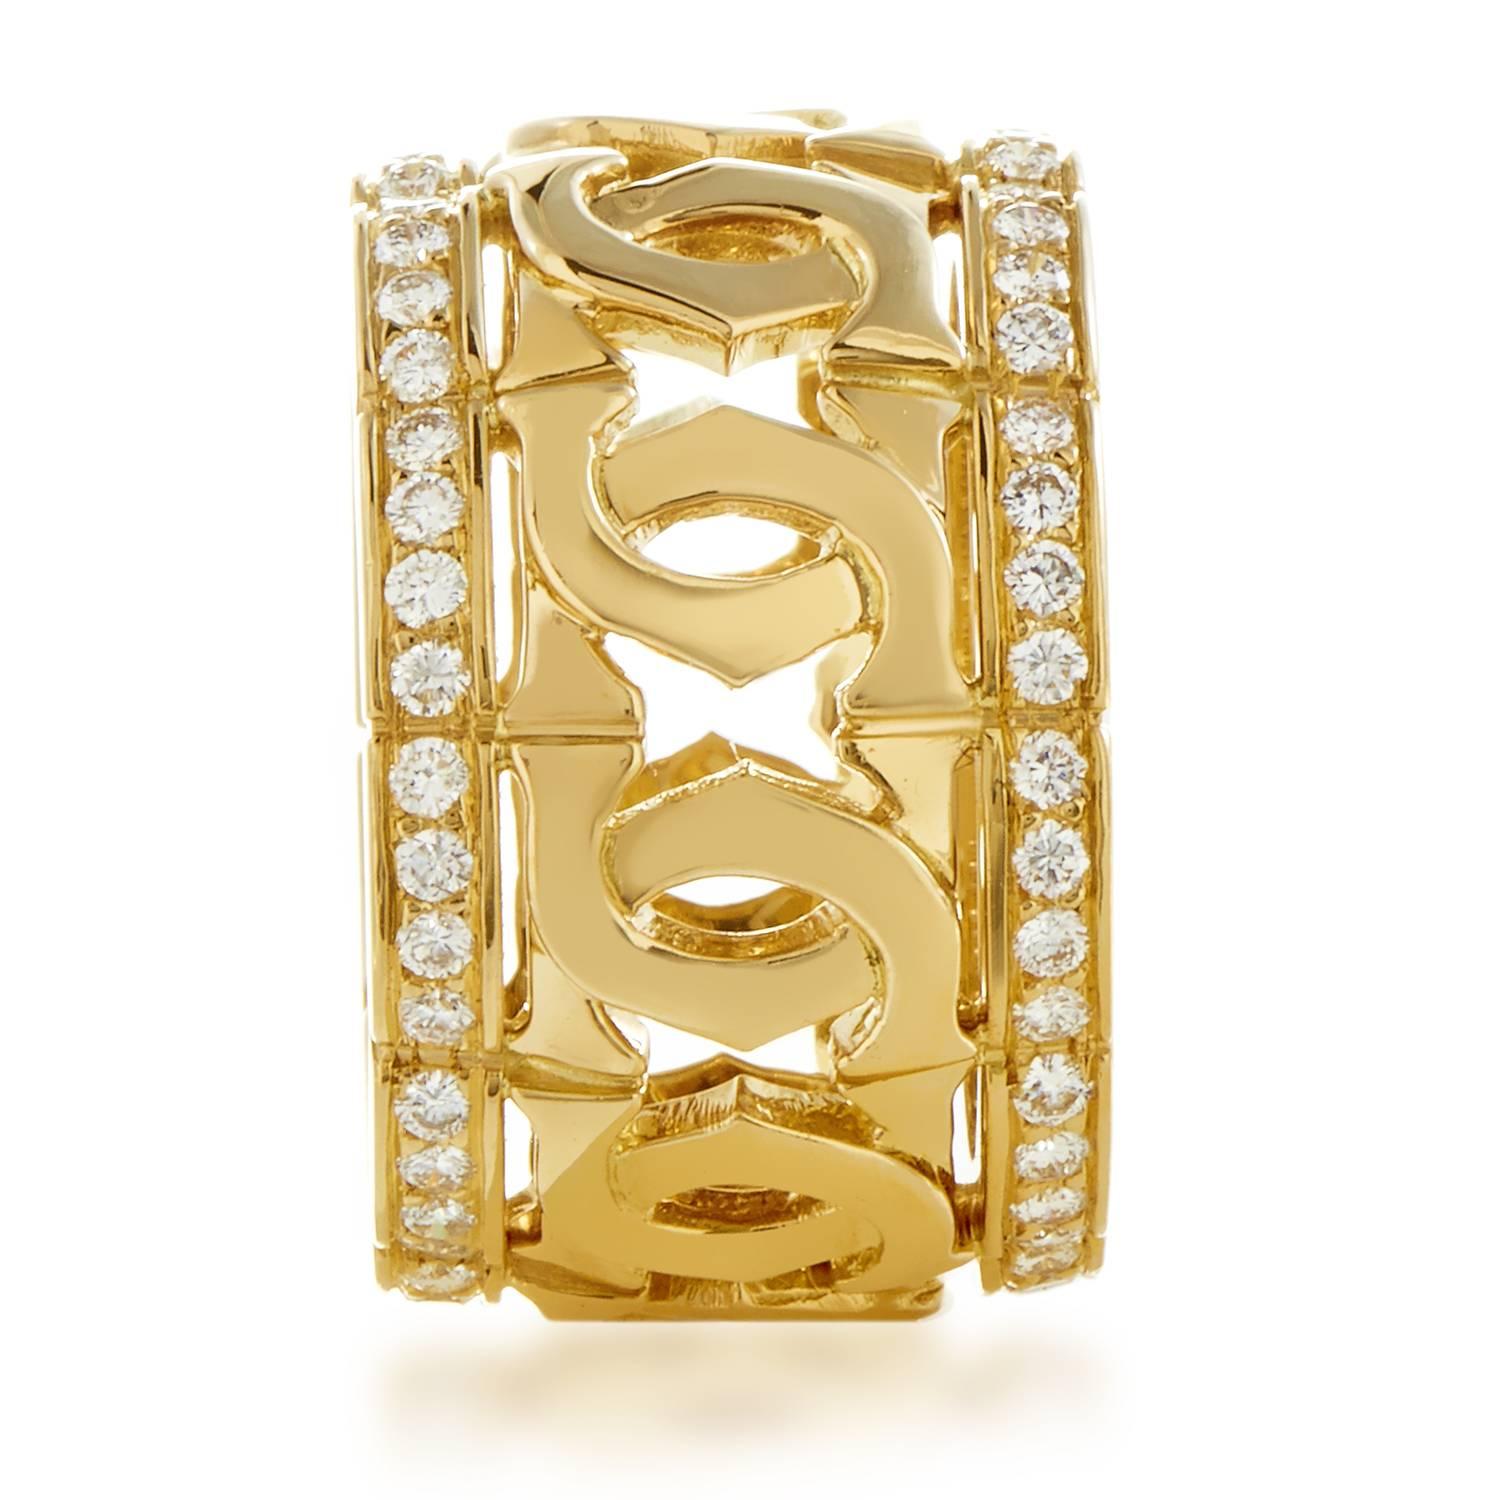 Cartier C de Cartier Women's 18K Yellow Gold Diamond Band Ring